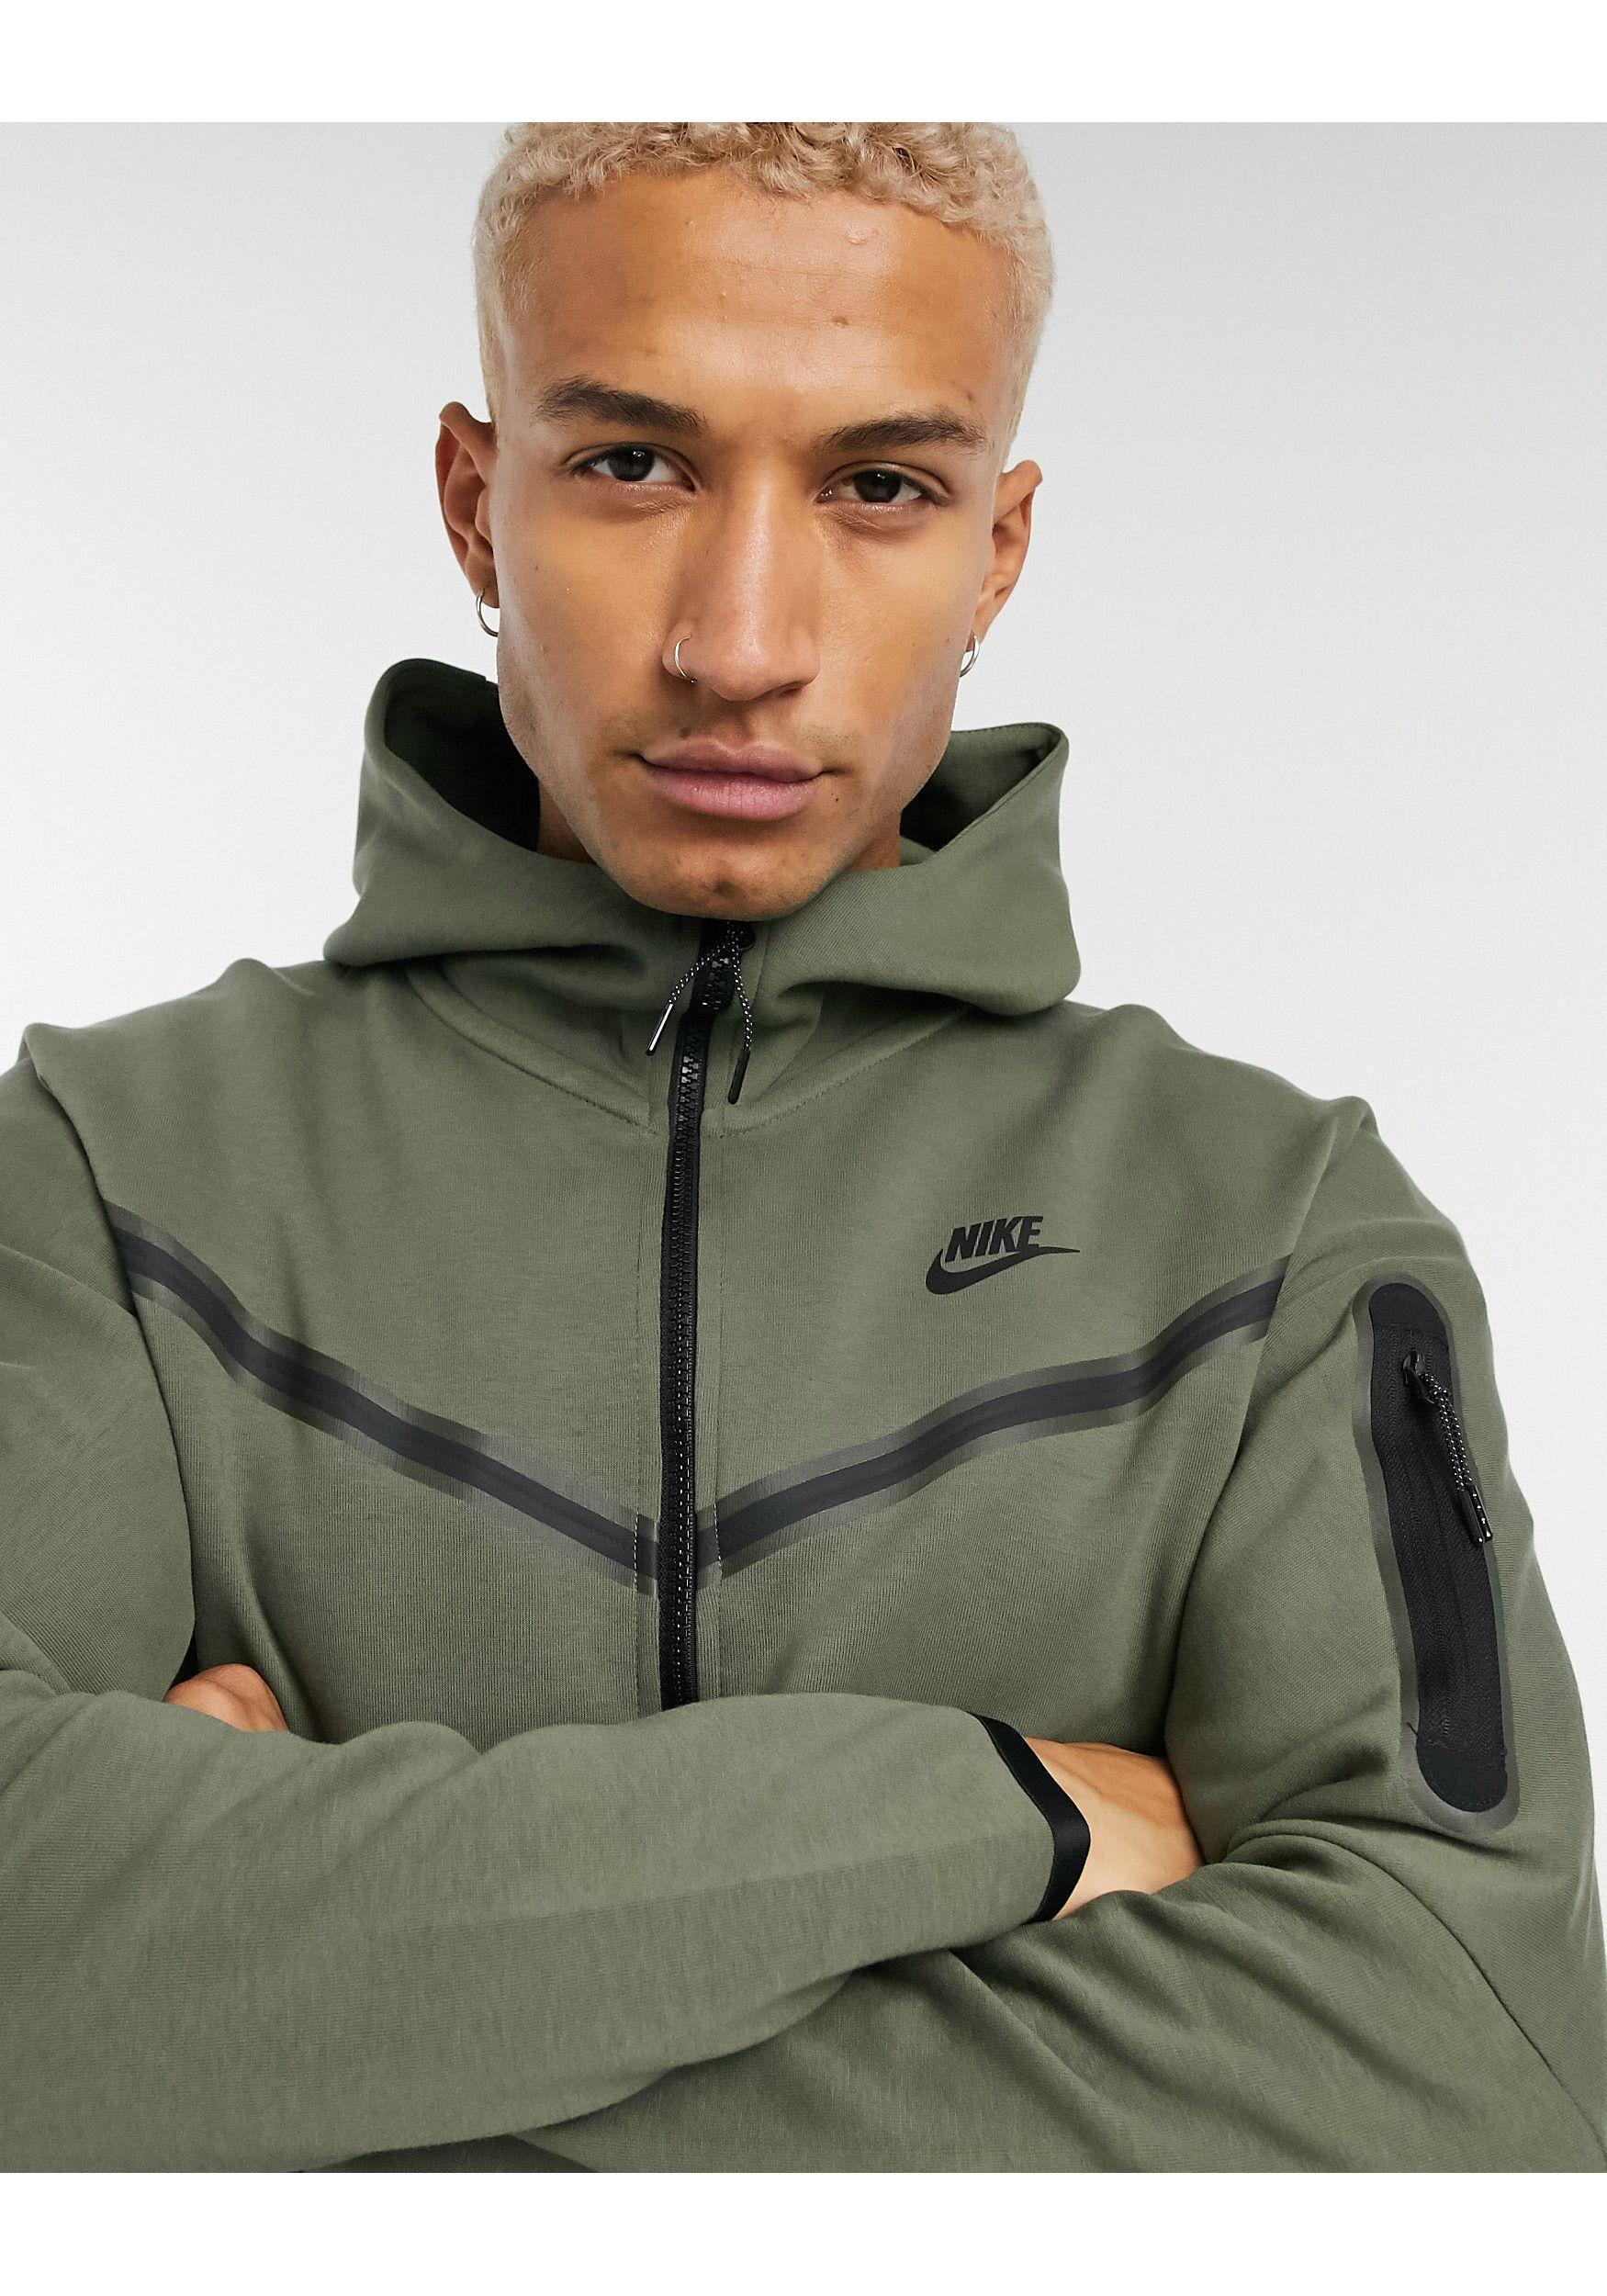 Nike Tech Fleece Full-zip Hoodie in Green for Men - Save 9% - Lyst